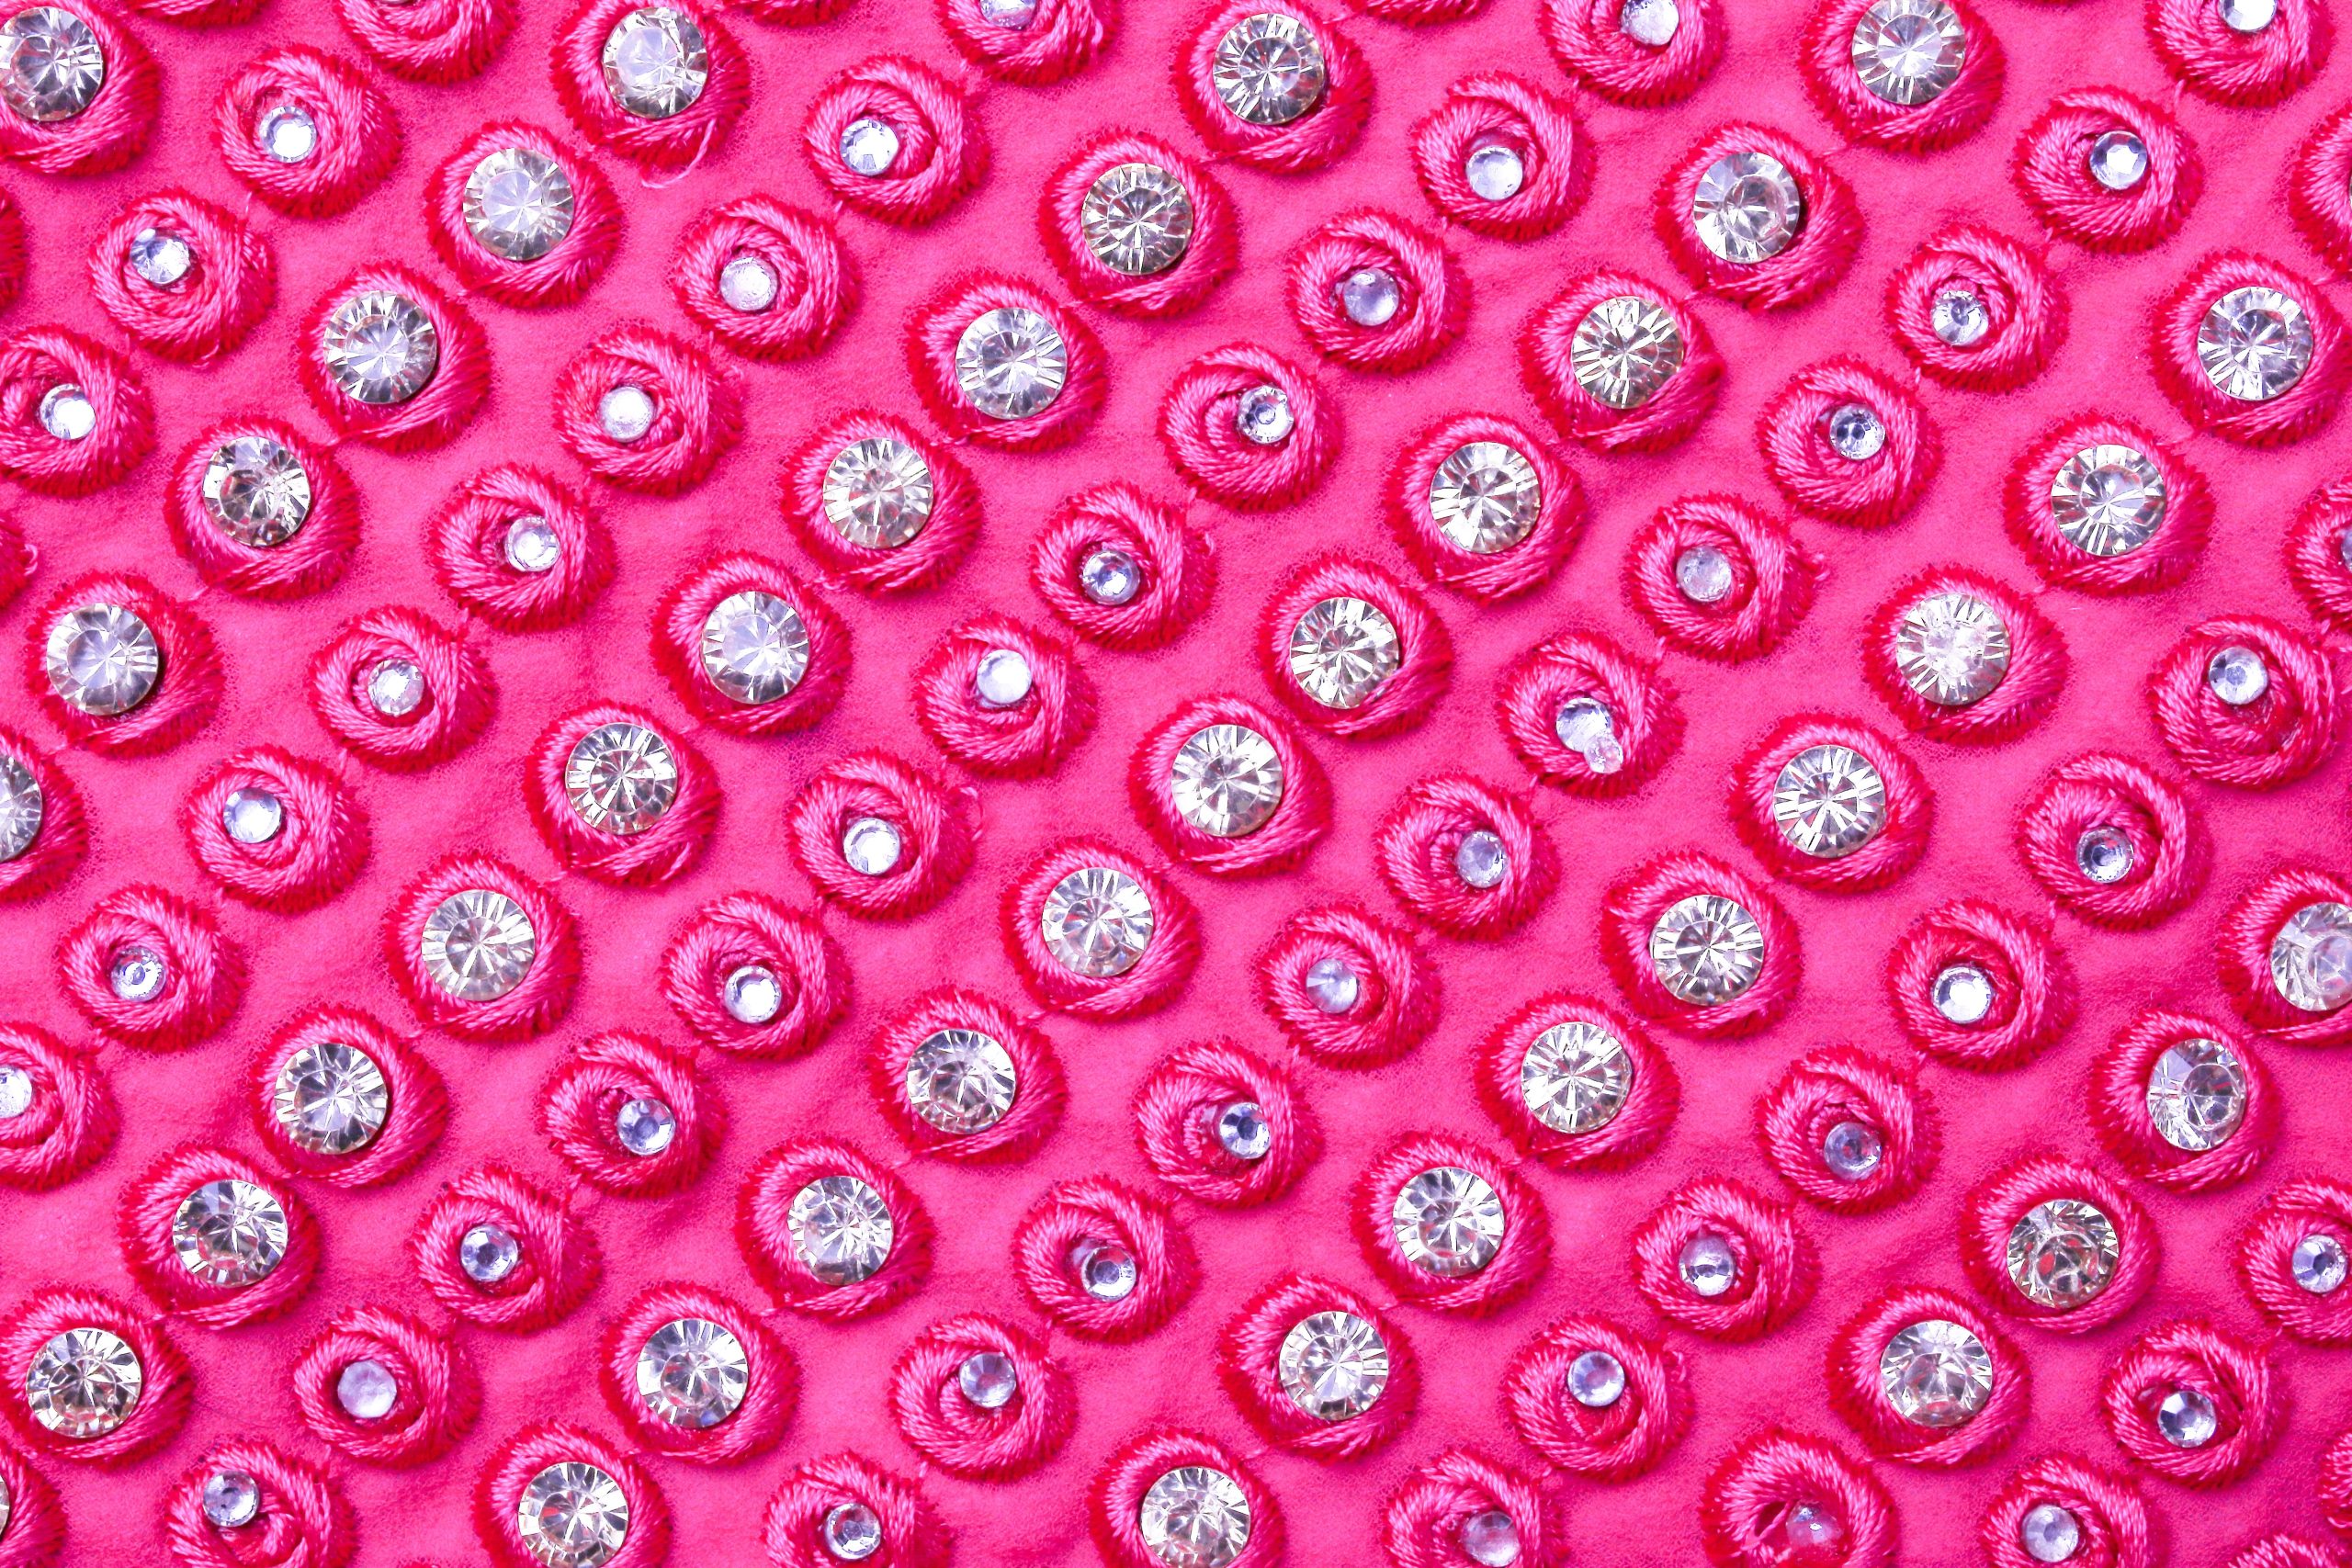 Diamonds Sewed on Pink Fabric